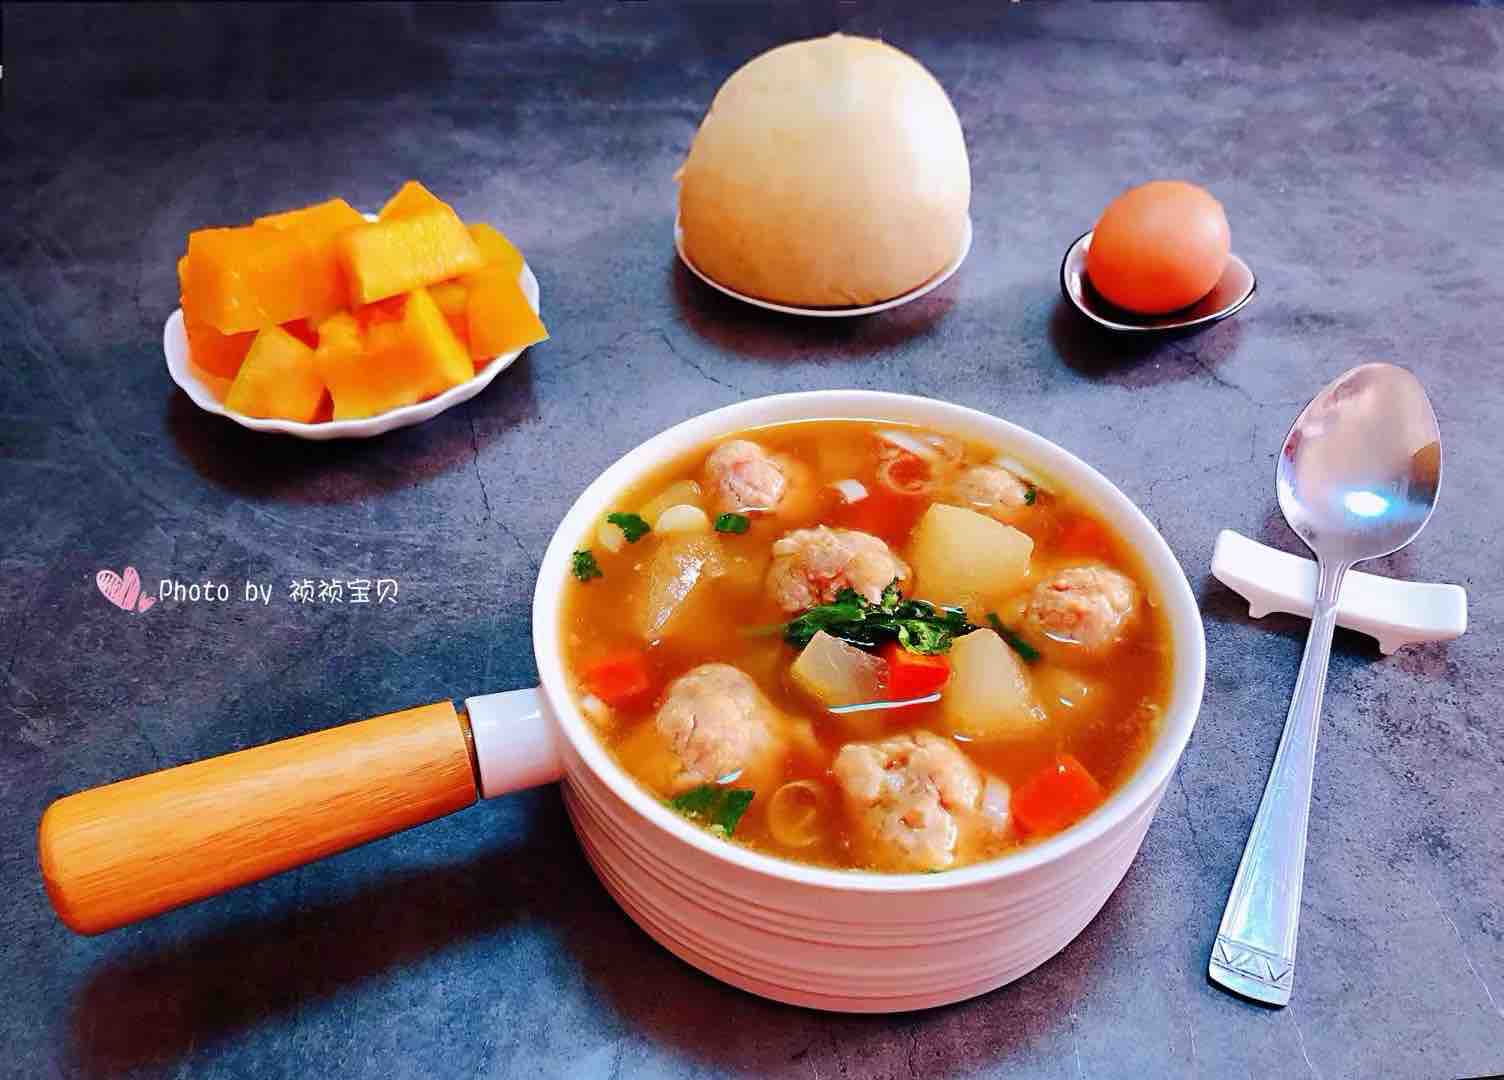 Winter Melon Carrot Meatball Soup recipe